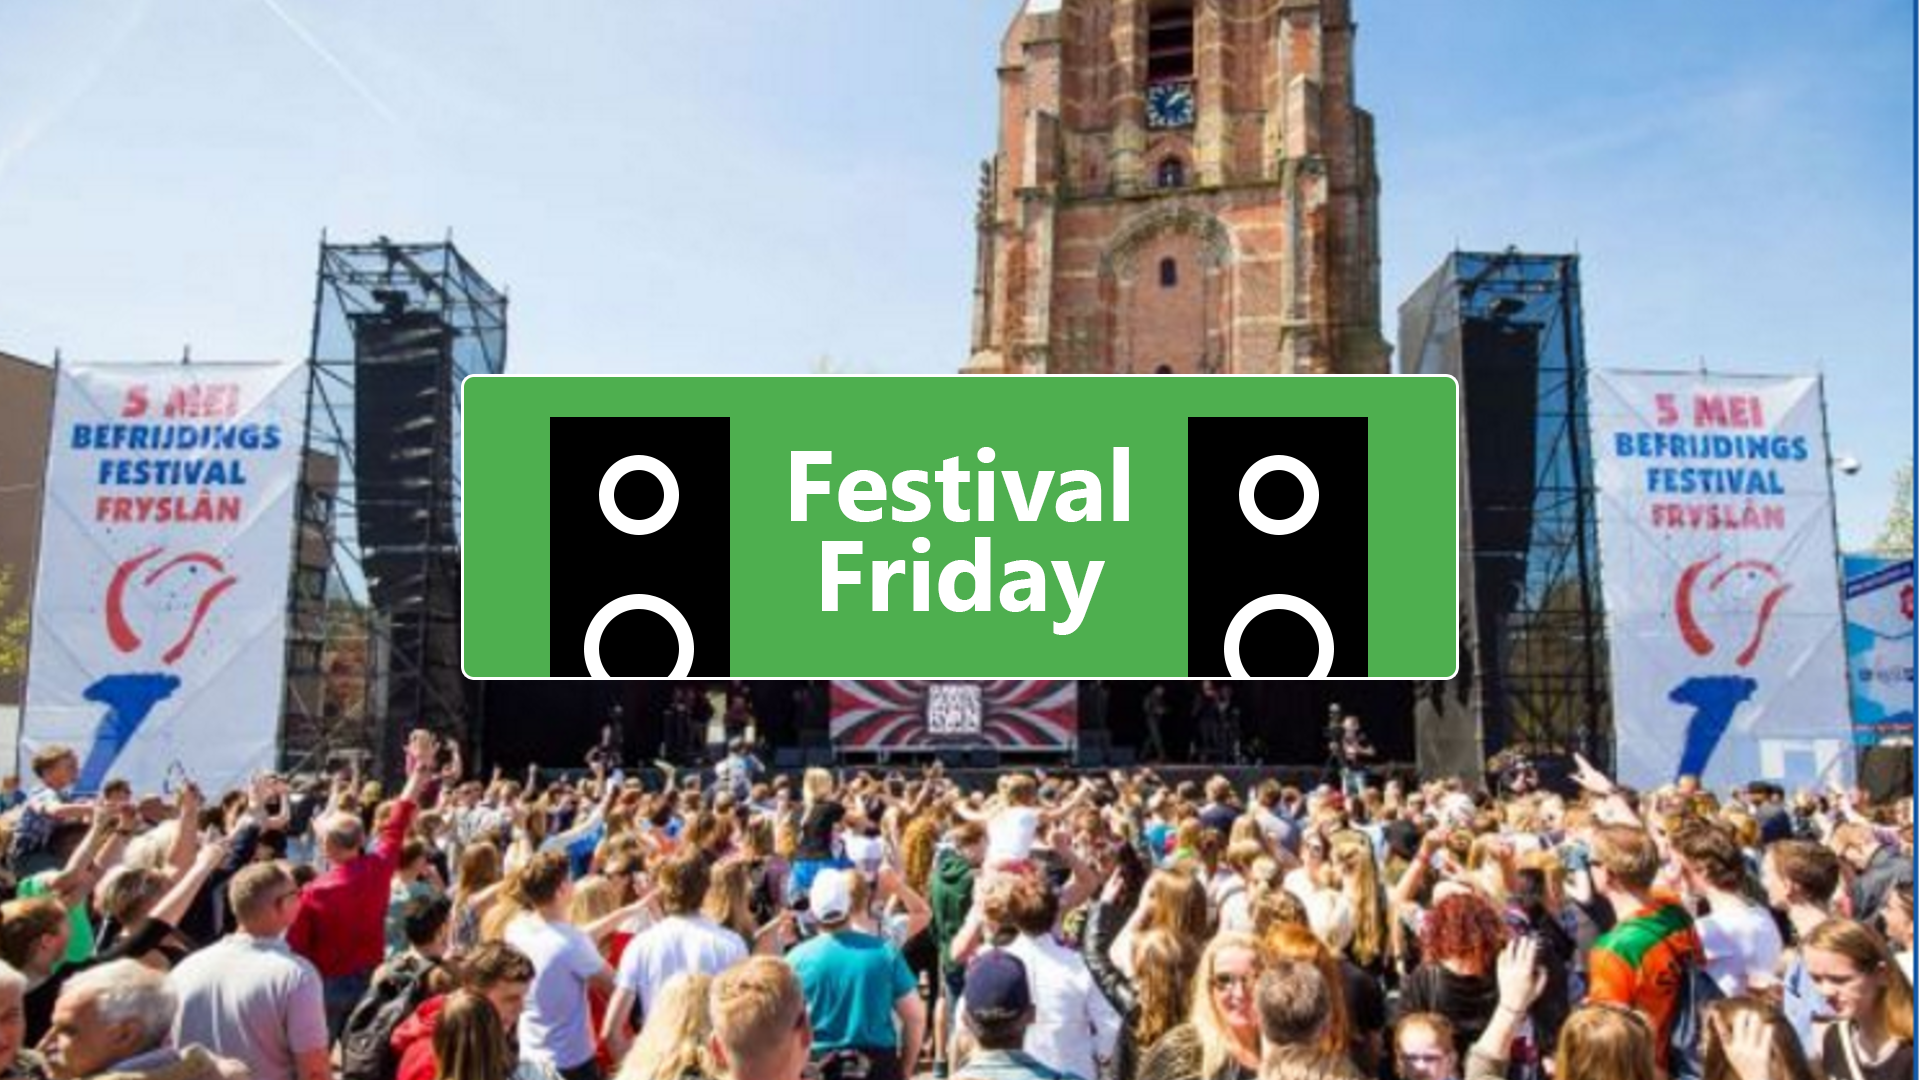 Festival Friday – Bevrijdingsfestivals – 5 mei 2017